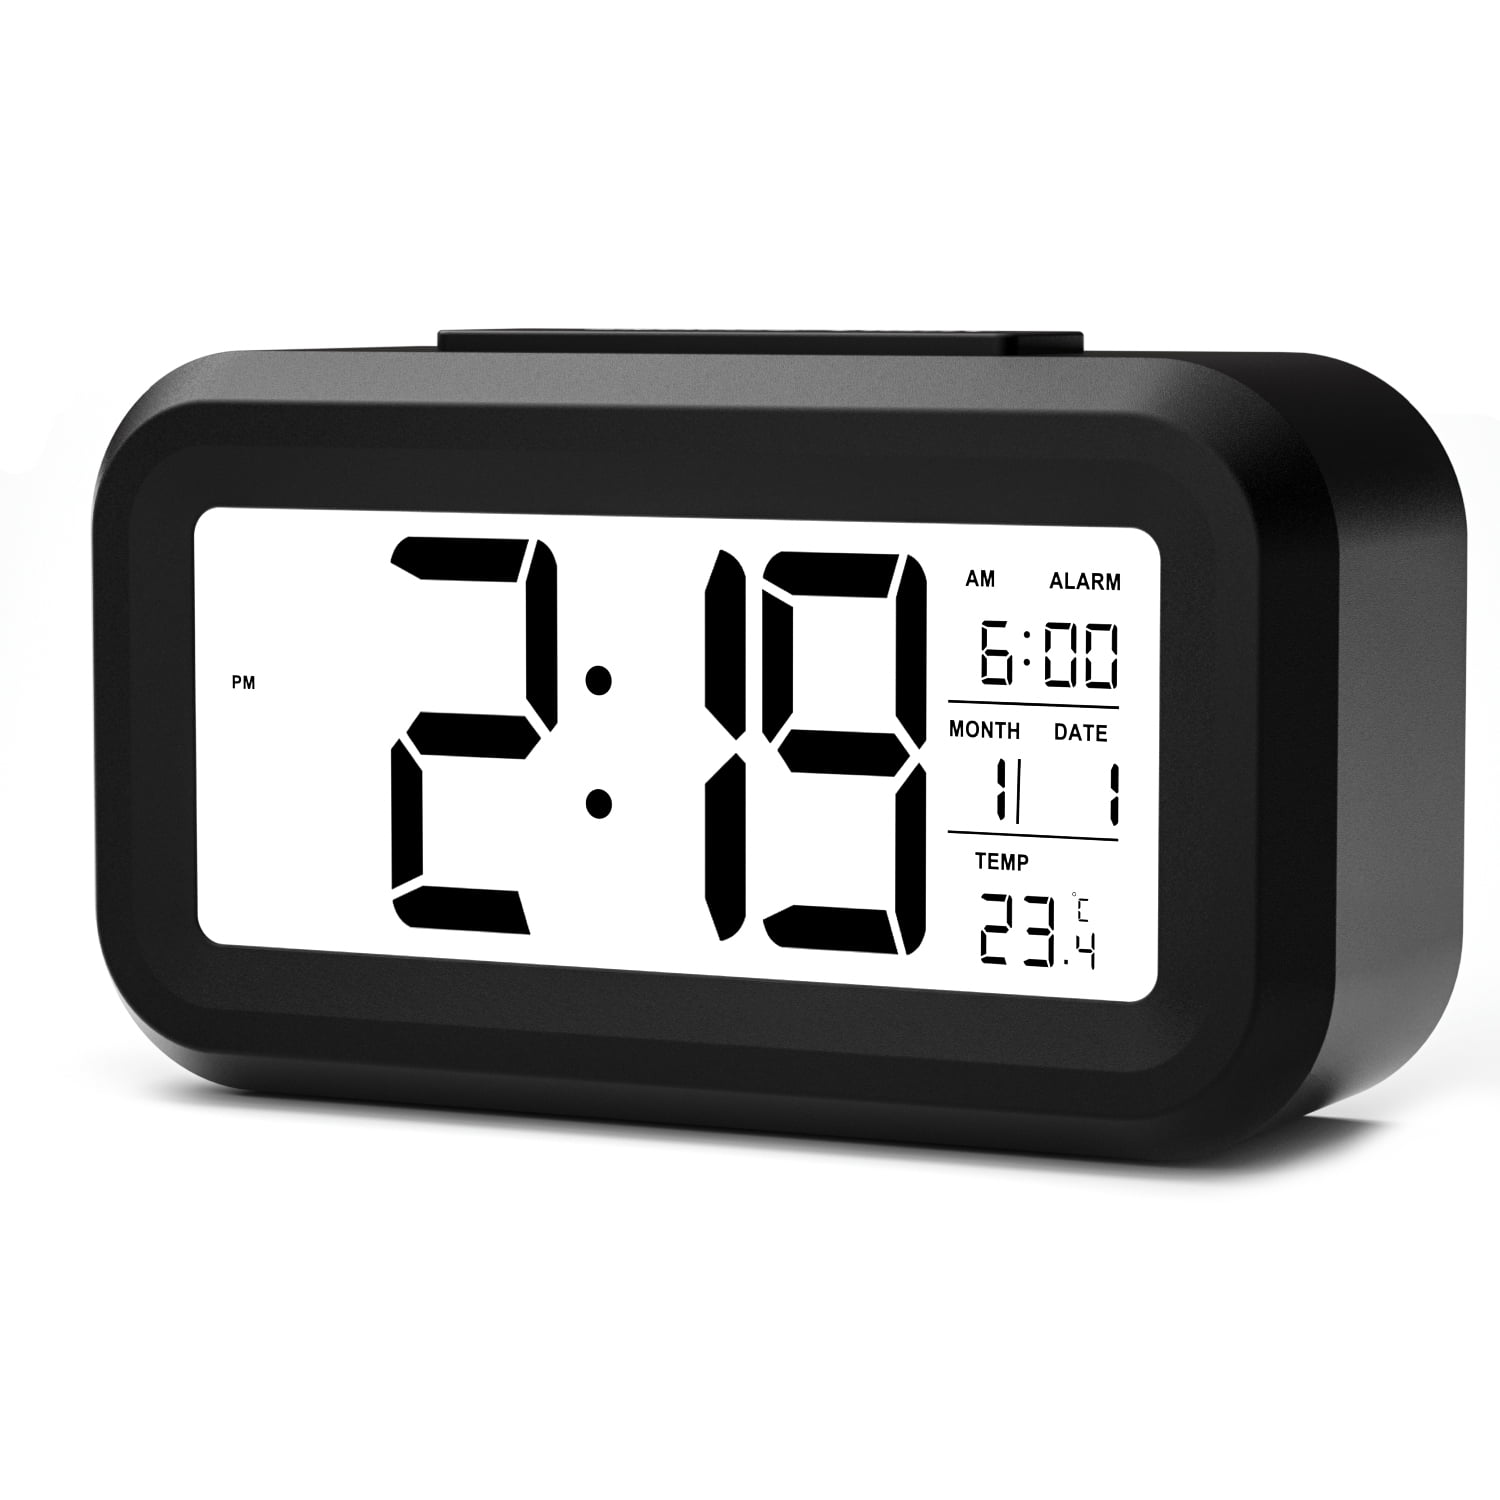 Digital Snooze LED Alarm Clock Backlight Time Calendar Thermometer Temperature 